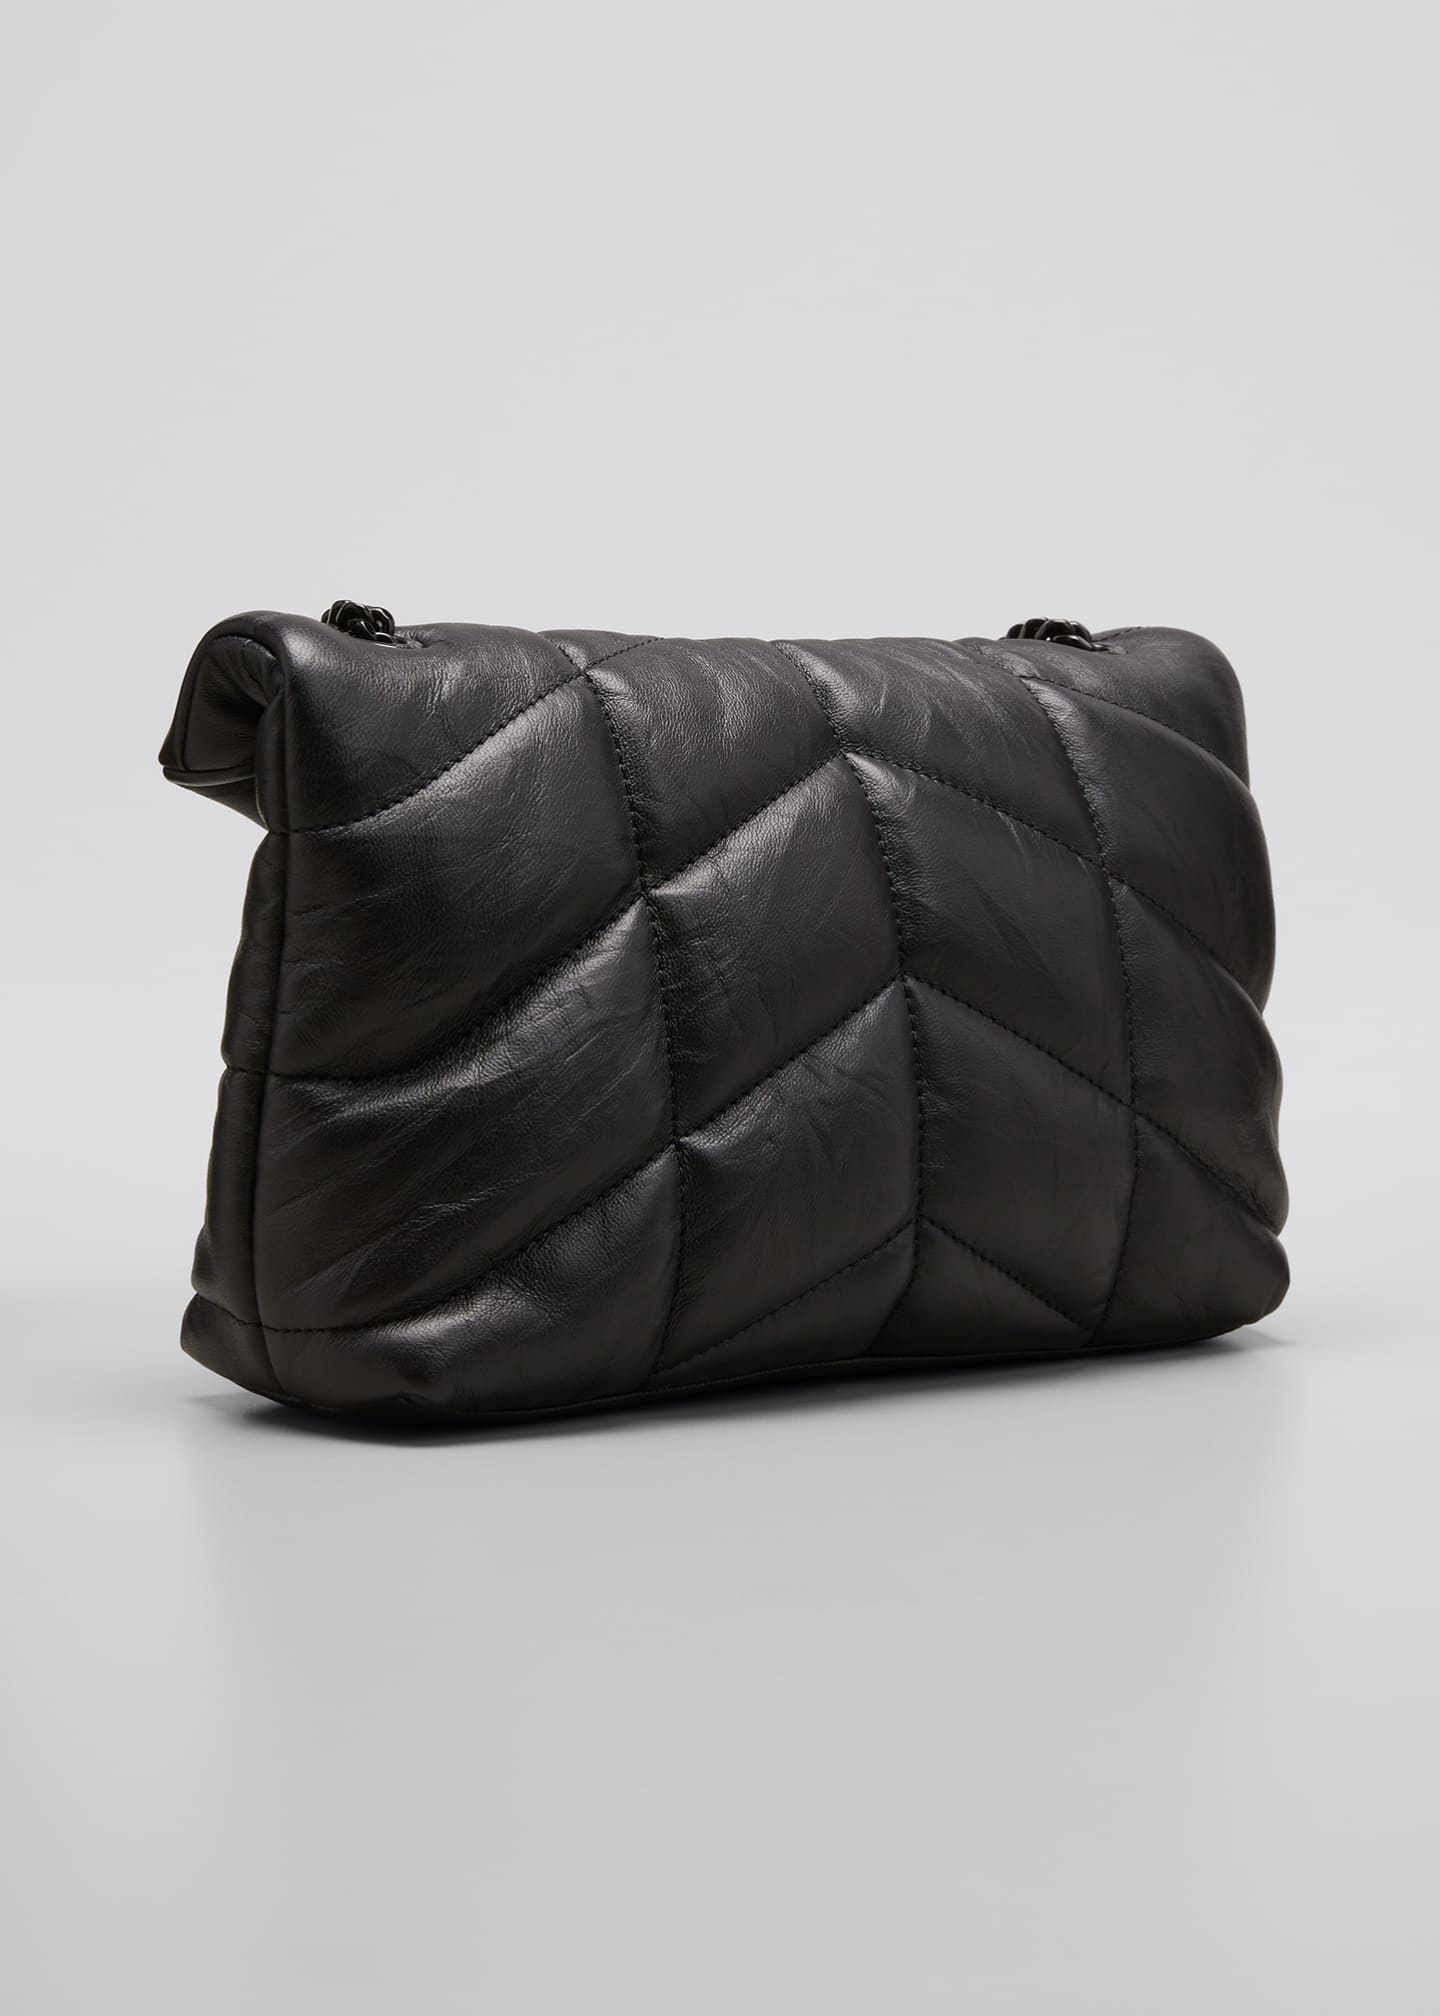 Saint Laurent LouLou YSL Toy Puffer Shoulder Bag - Bergdorf Goodman